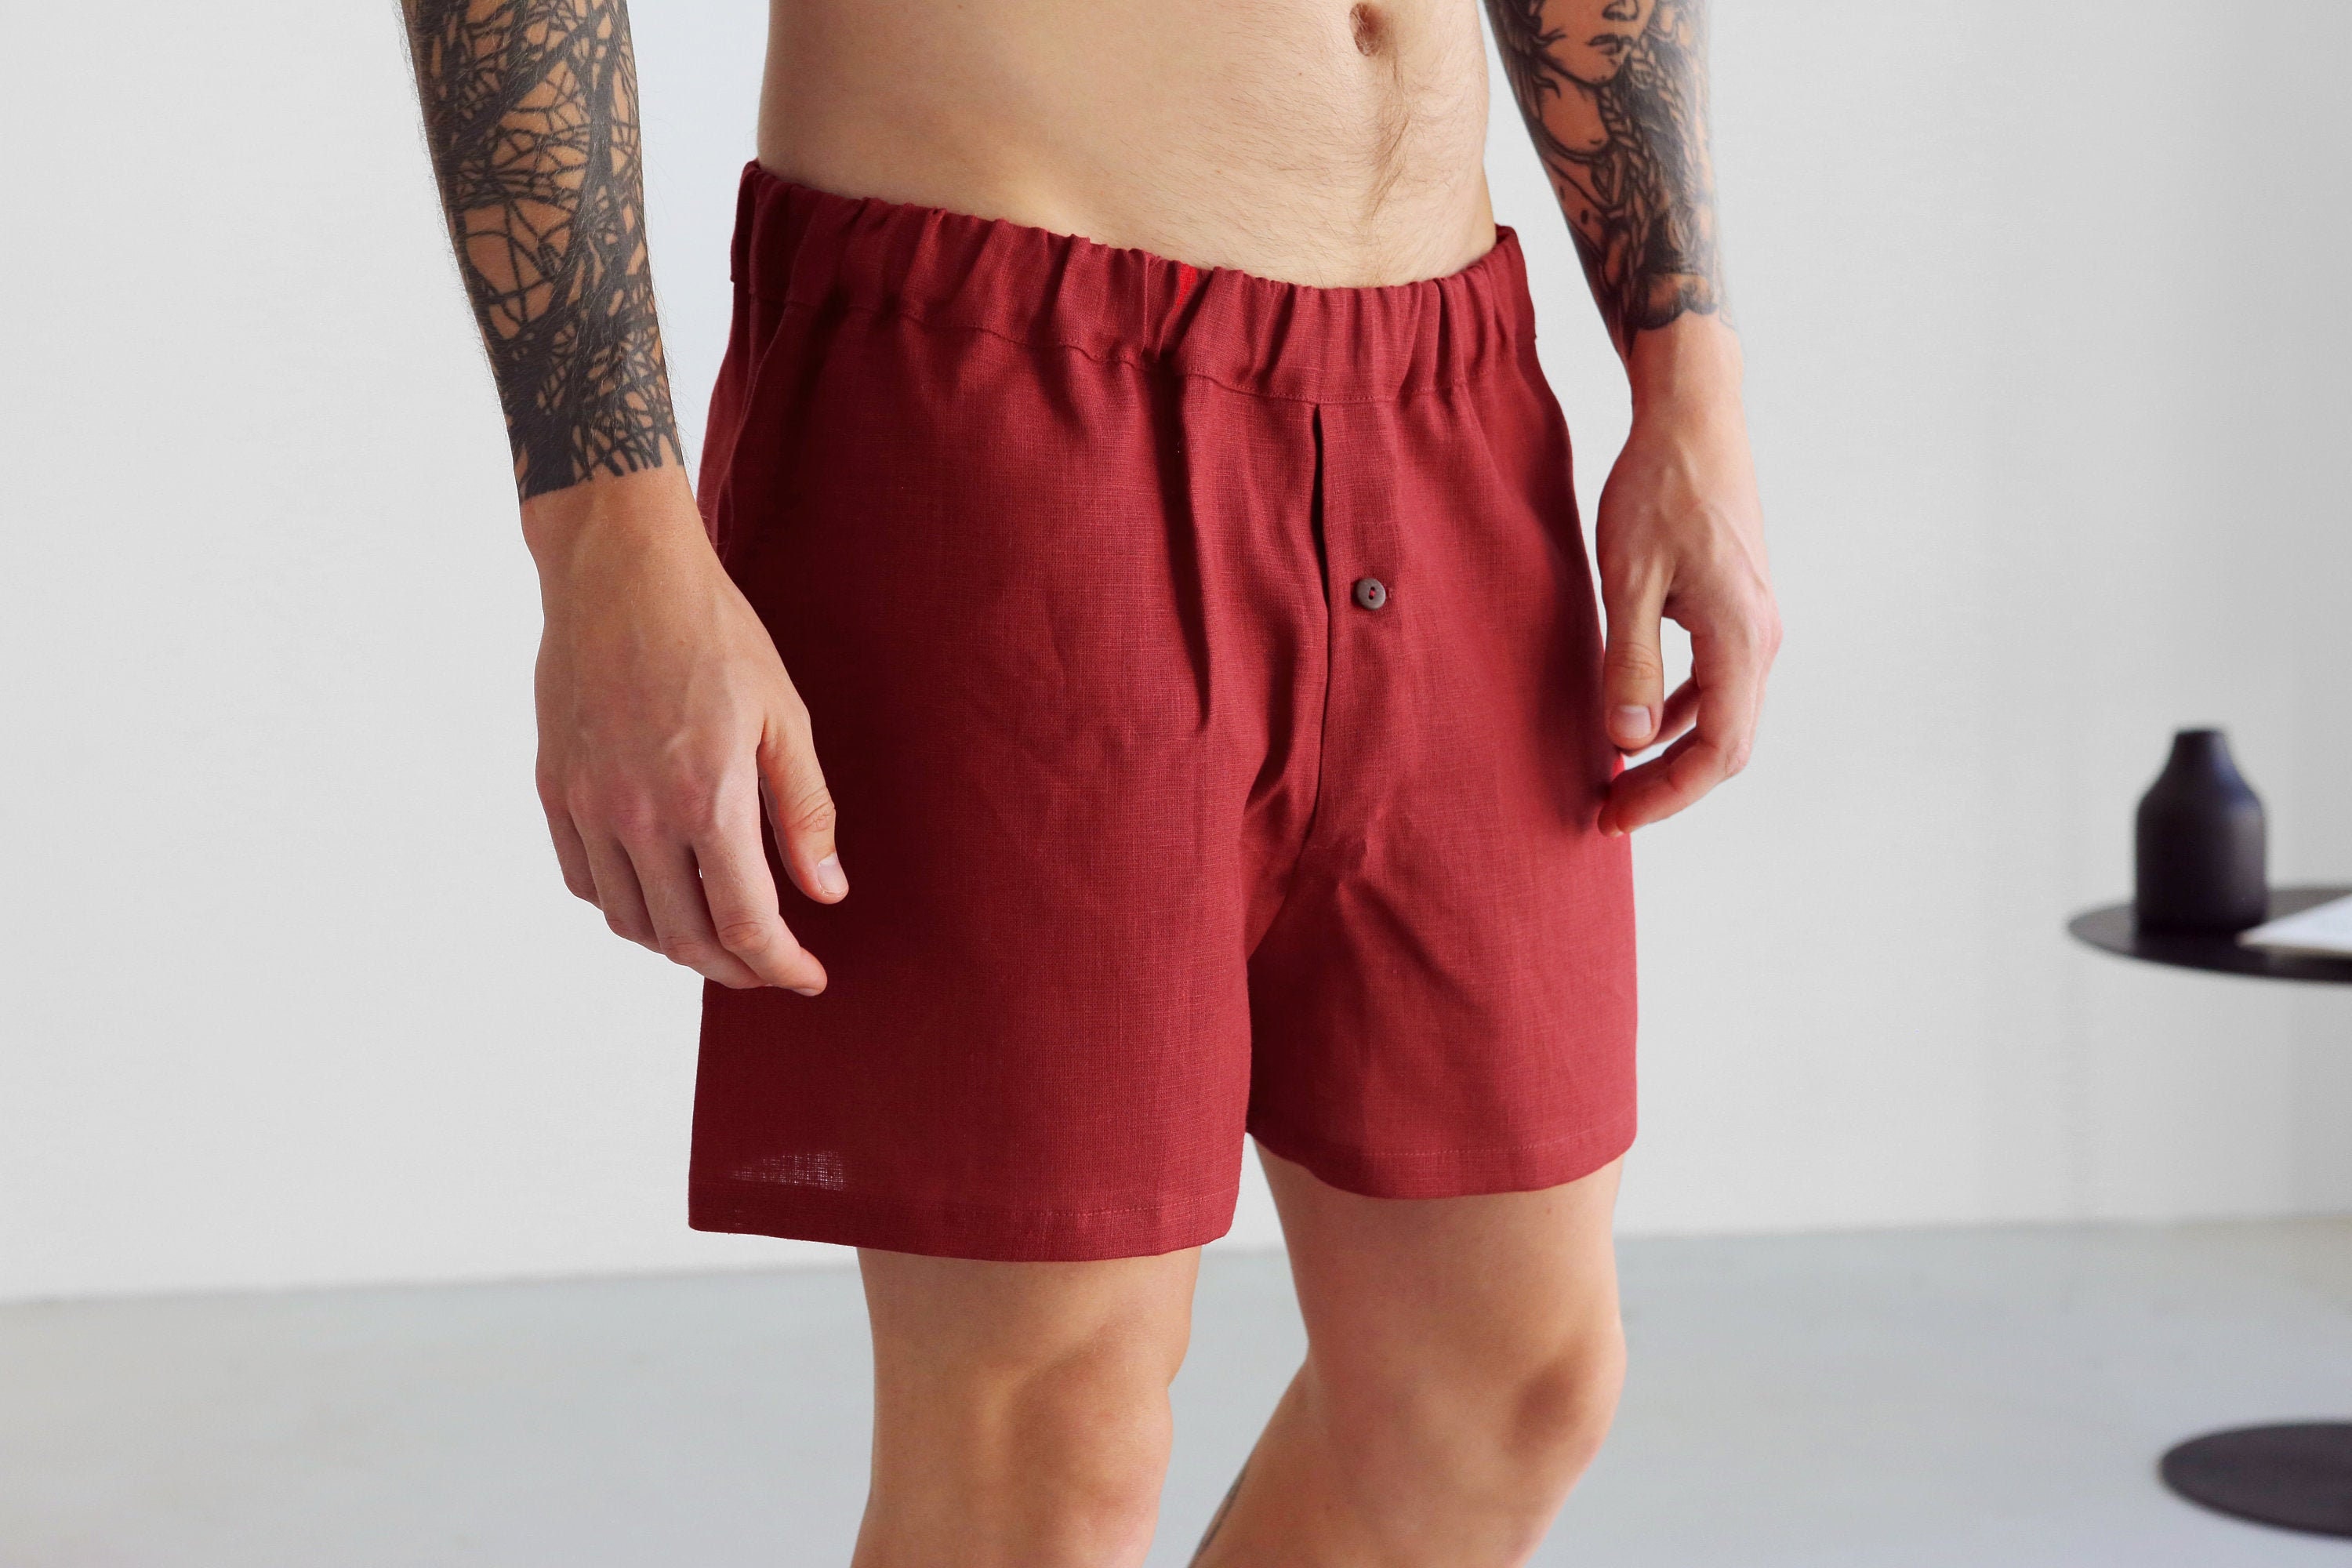 Linen Shorts, Organic Sleep Boxer, Pajama Shorts, Men's Linen Underwear,  Linen Boxers Briefs, Beige Underwear Men's Flax Gift -  Canada